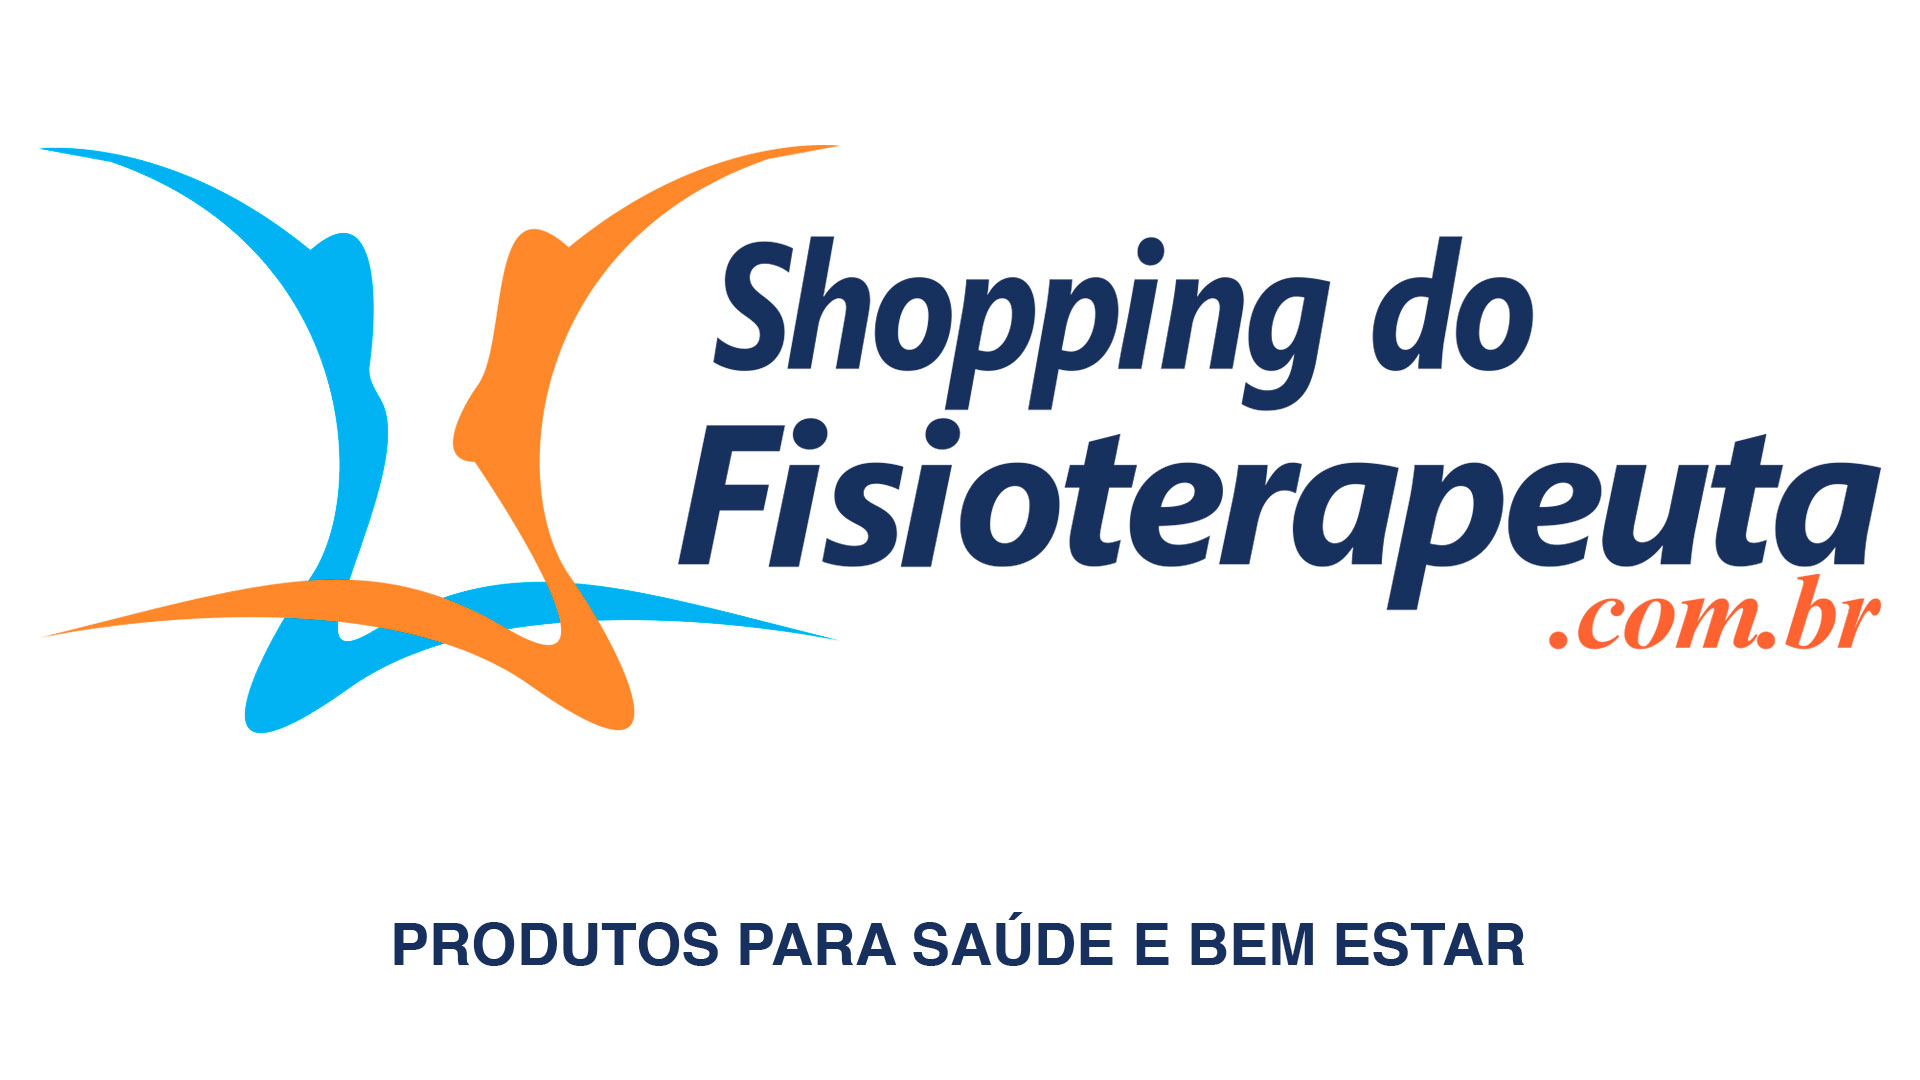 (c) Shoppingdofisioterapeuta.com.br